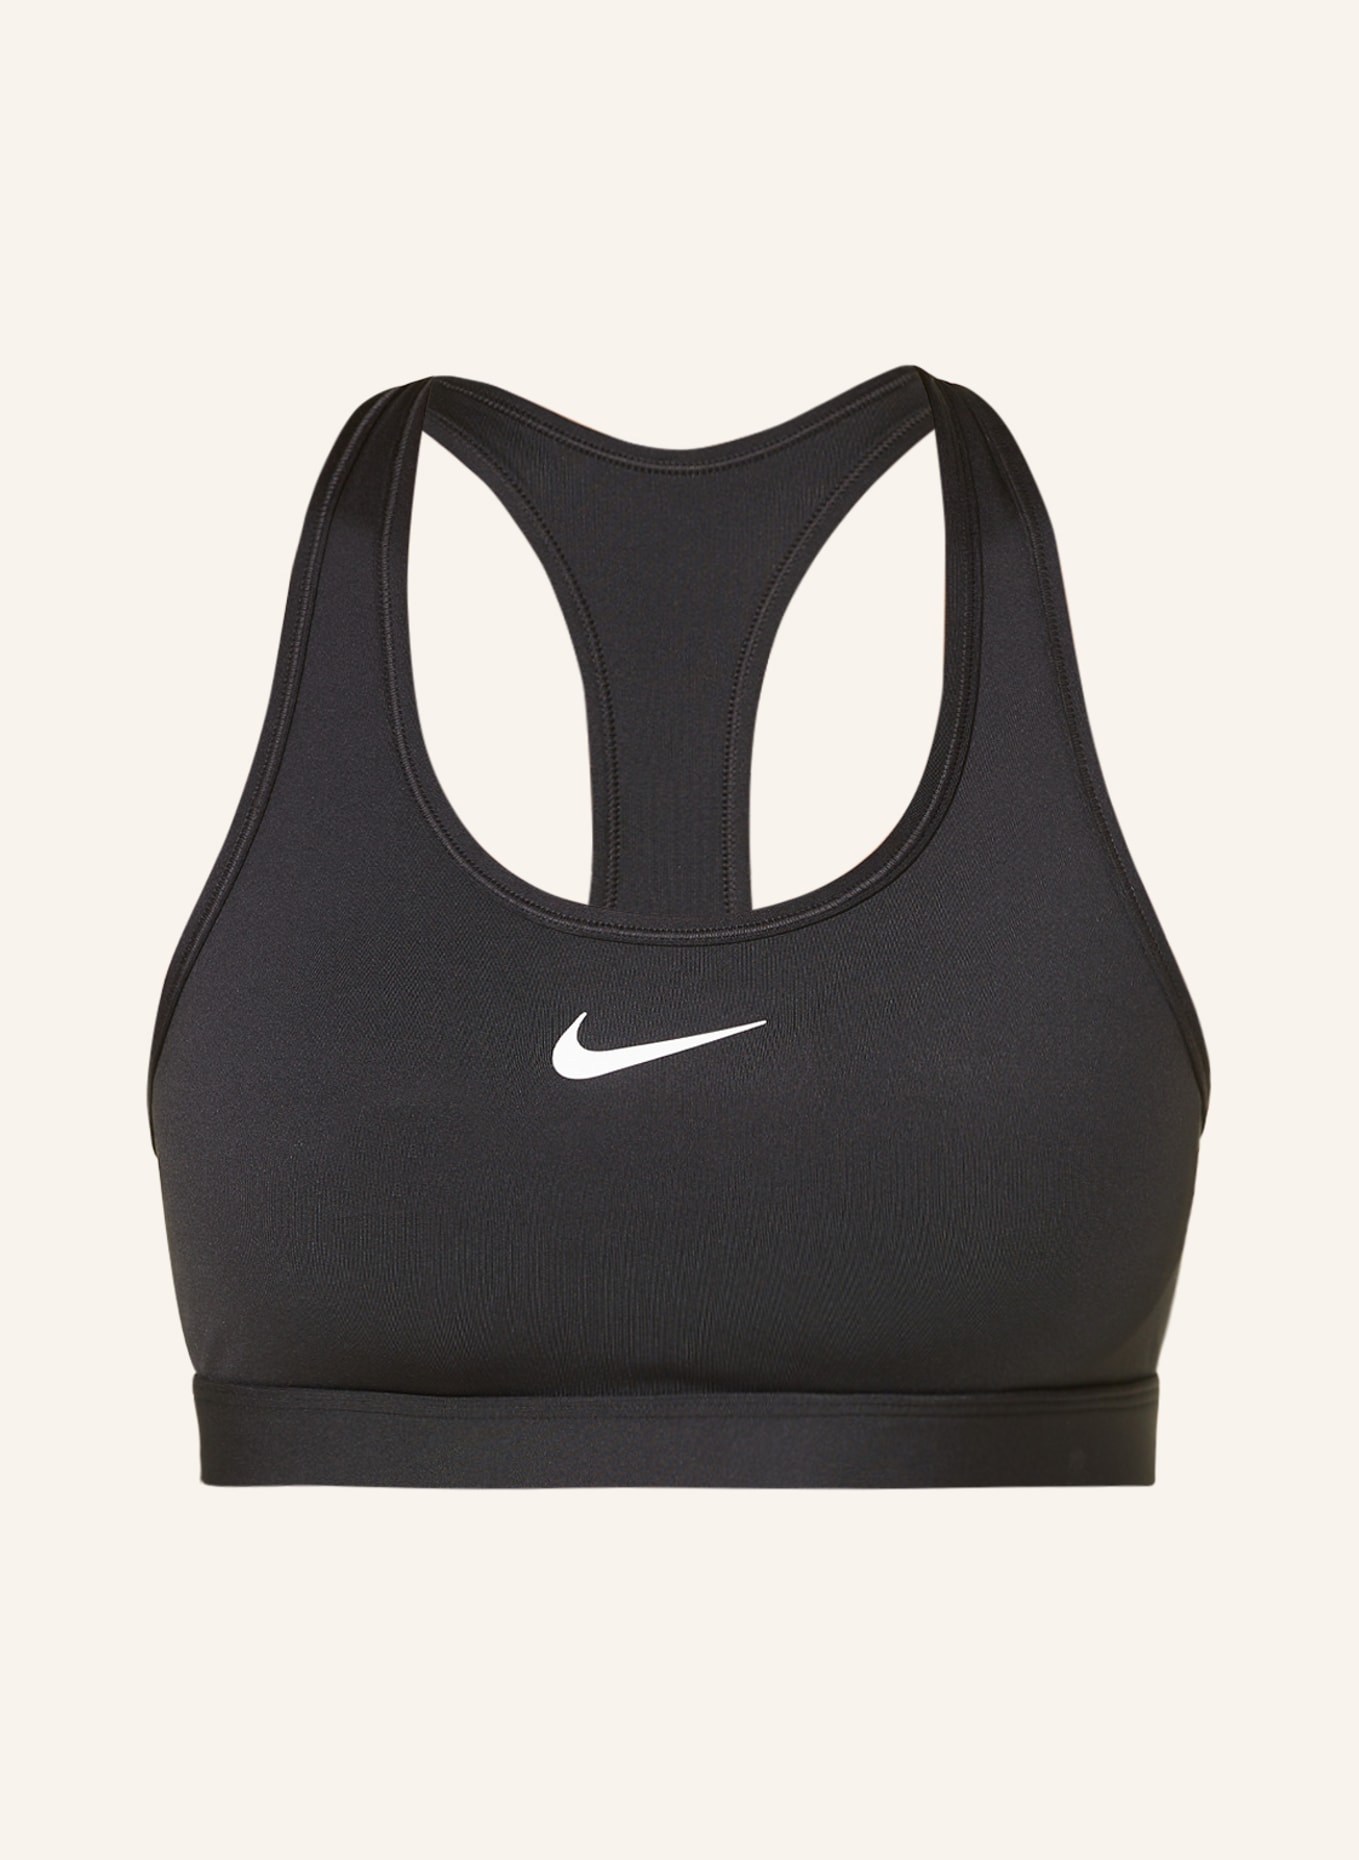 Nike Sports bra DRI-FIT SWOOSH with mesh in black